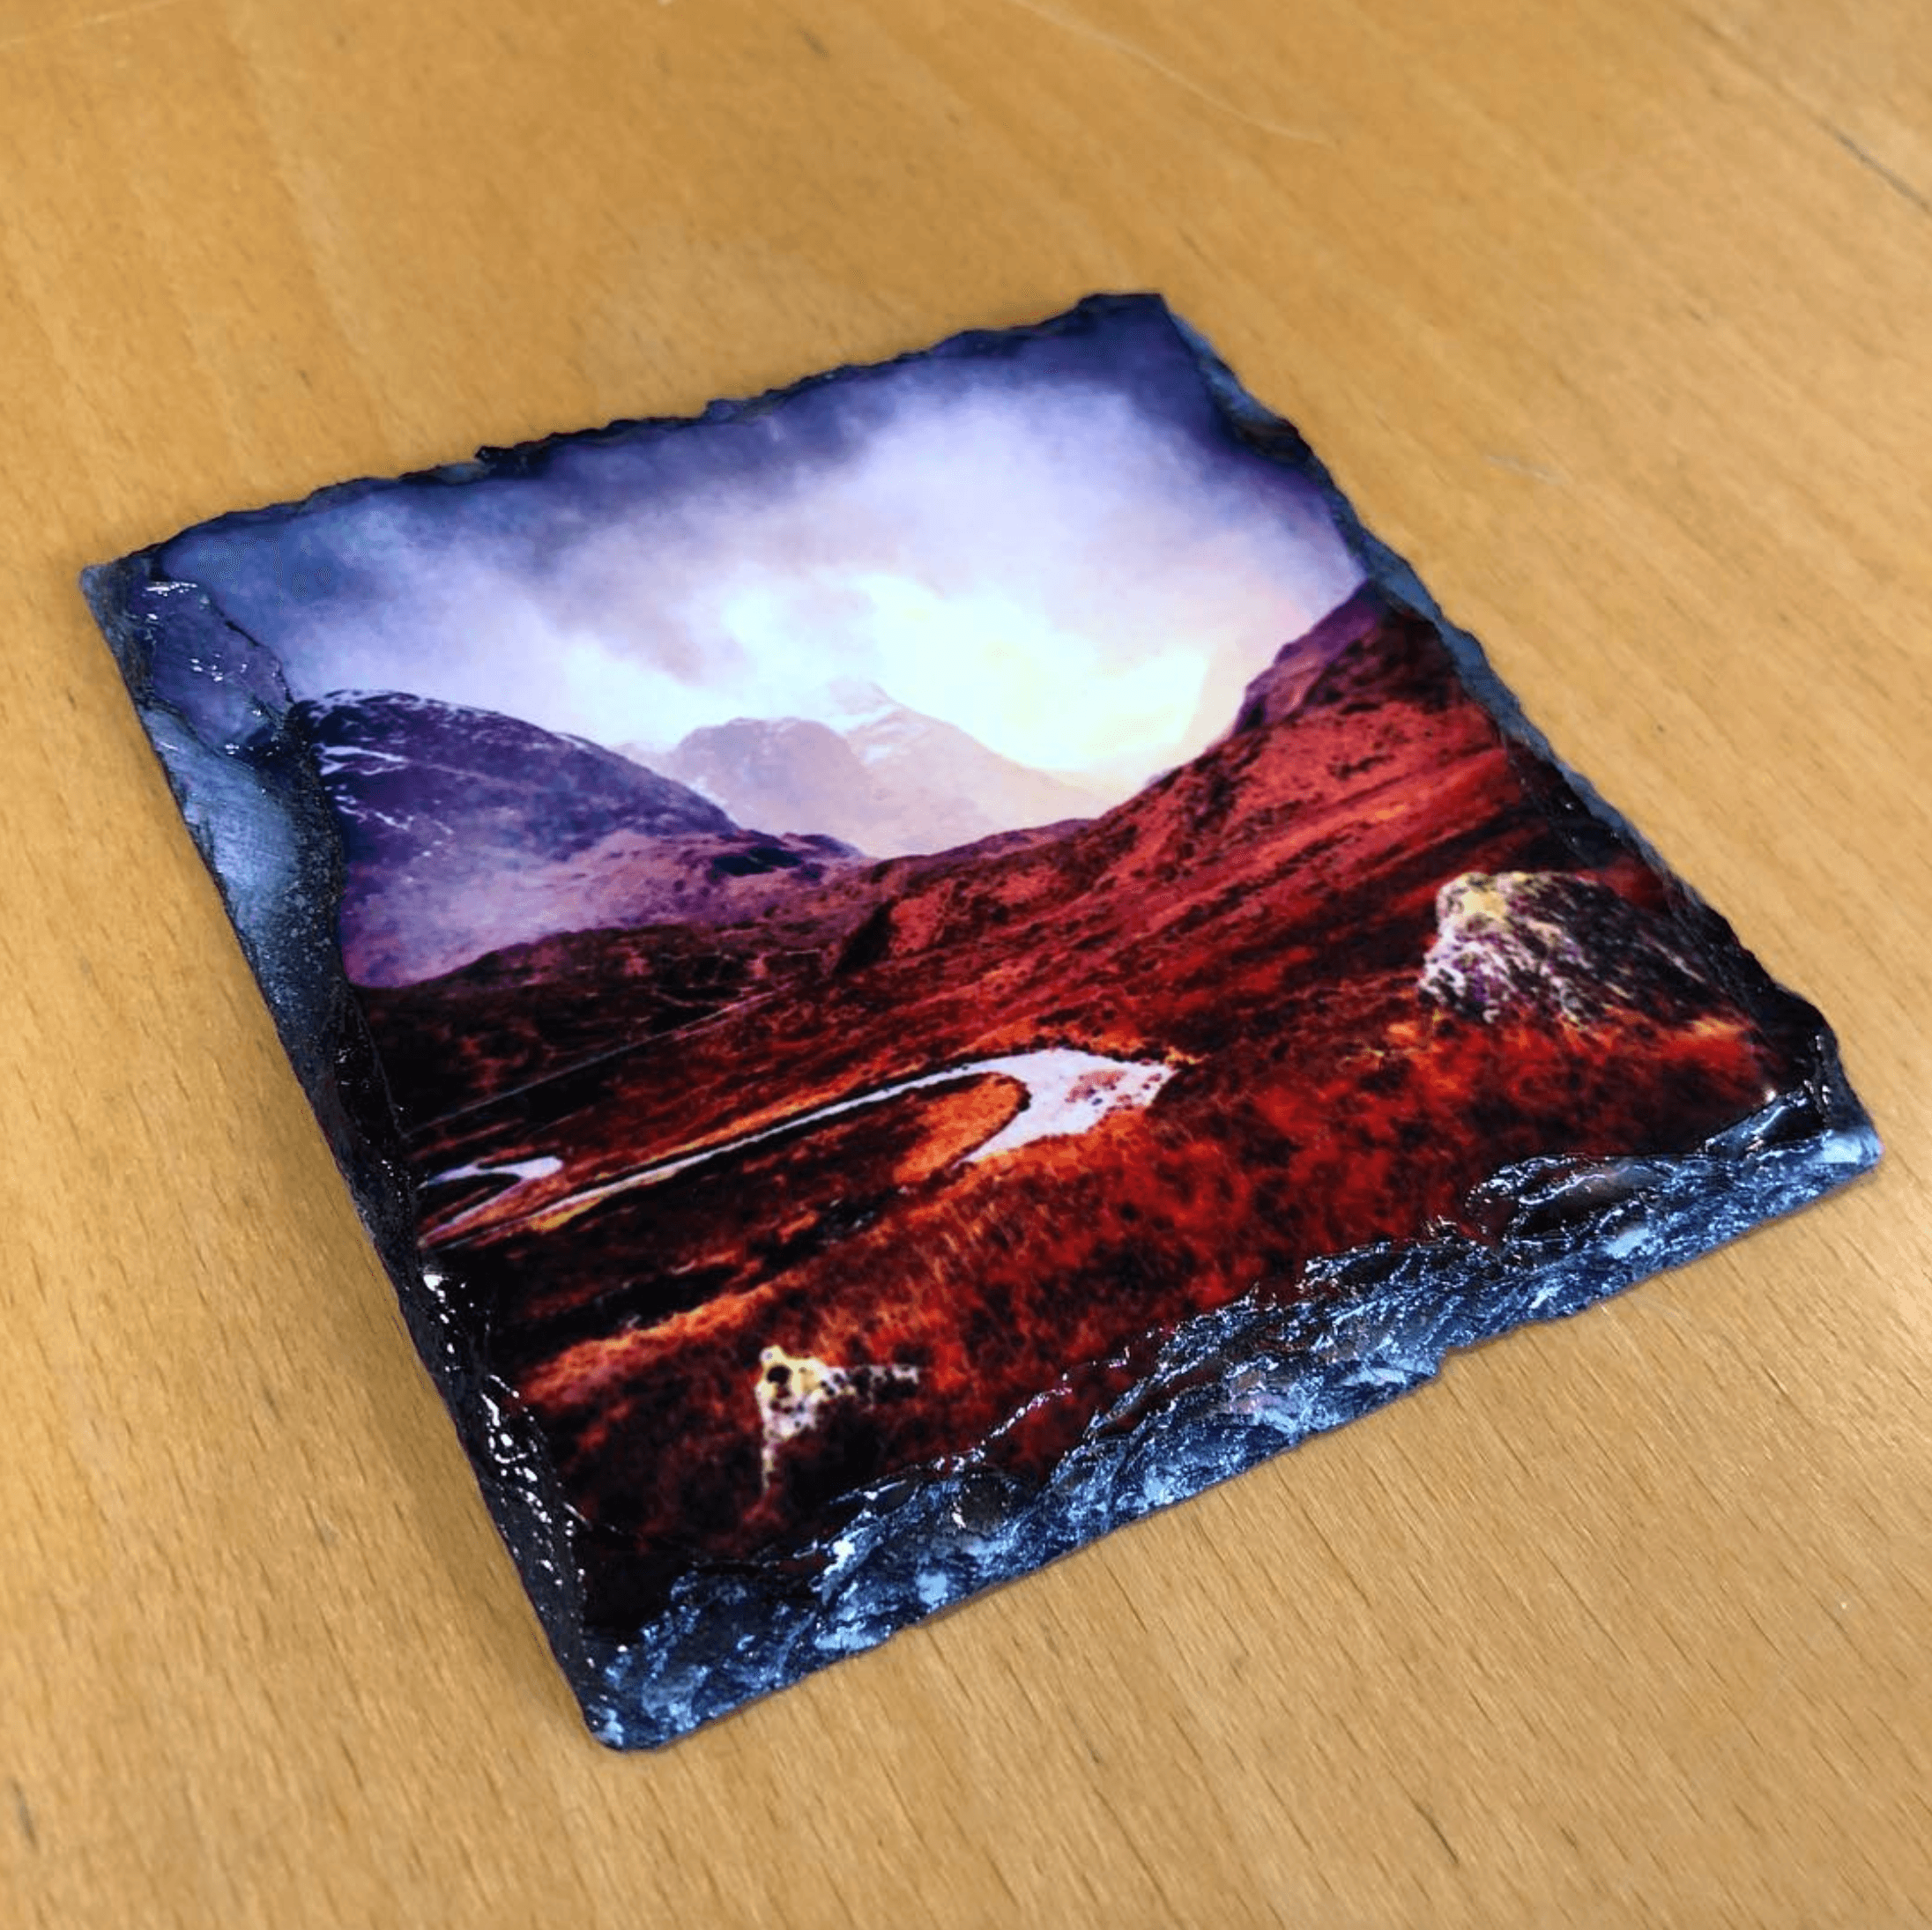 Glen Nevis Moonlight Slate Art-Slate Art-Scottish Mountains & Munros Art Gallery-Paintings, Prints, Homeware, Art Gifts From Scotland By Scottish Artist Kevin Hunter